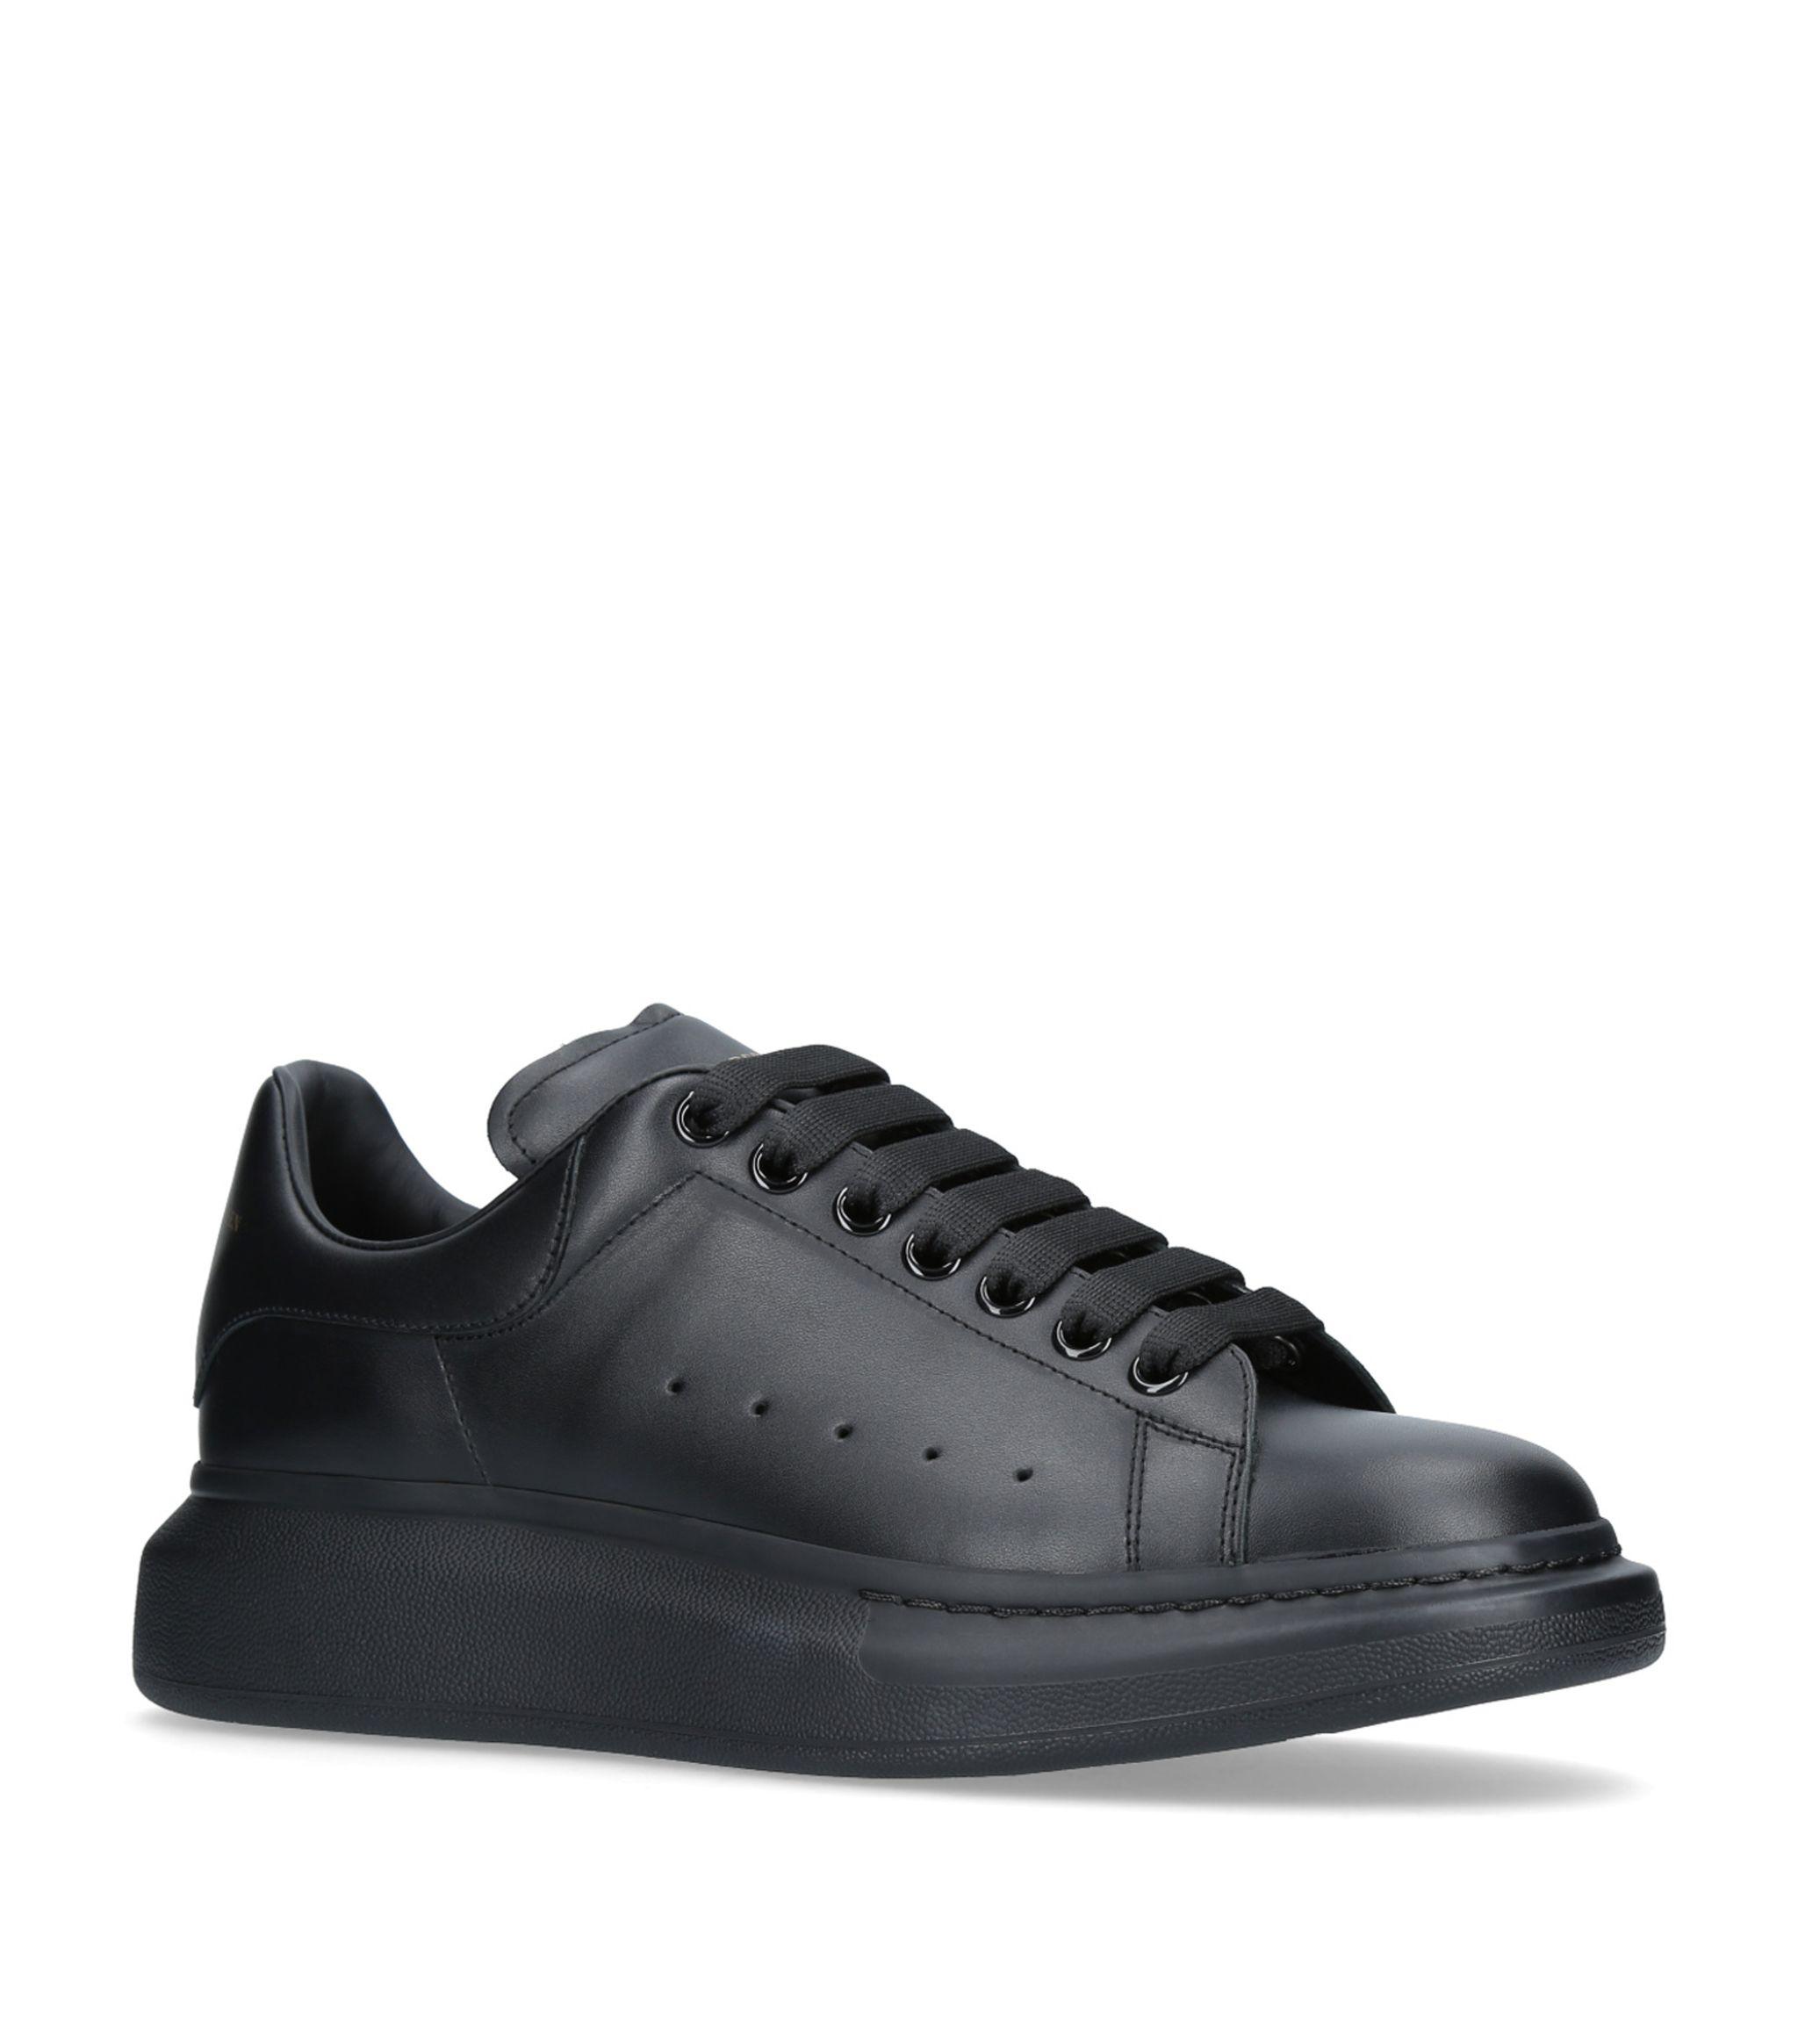 Alexander McQueen Leather Oversized Sneaker in Black for Men - Save 53% ...